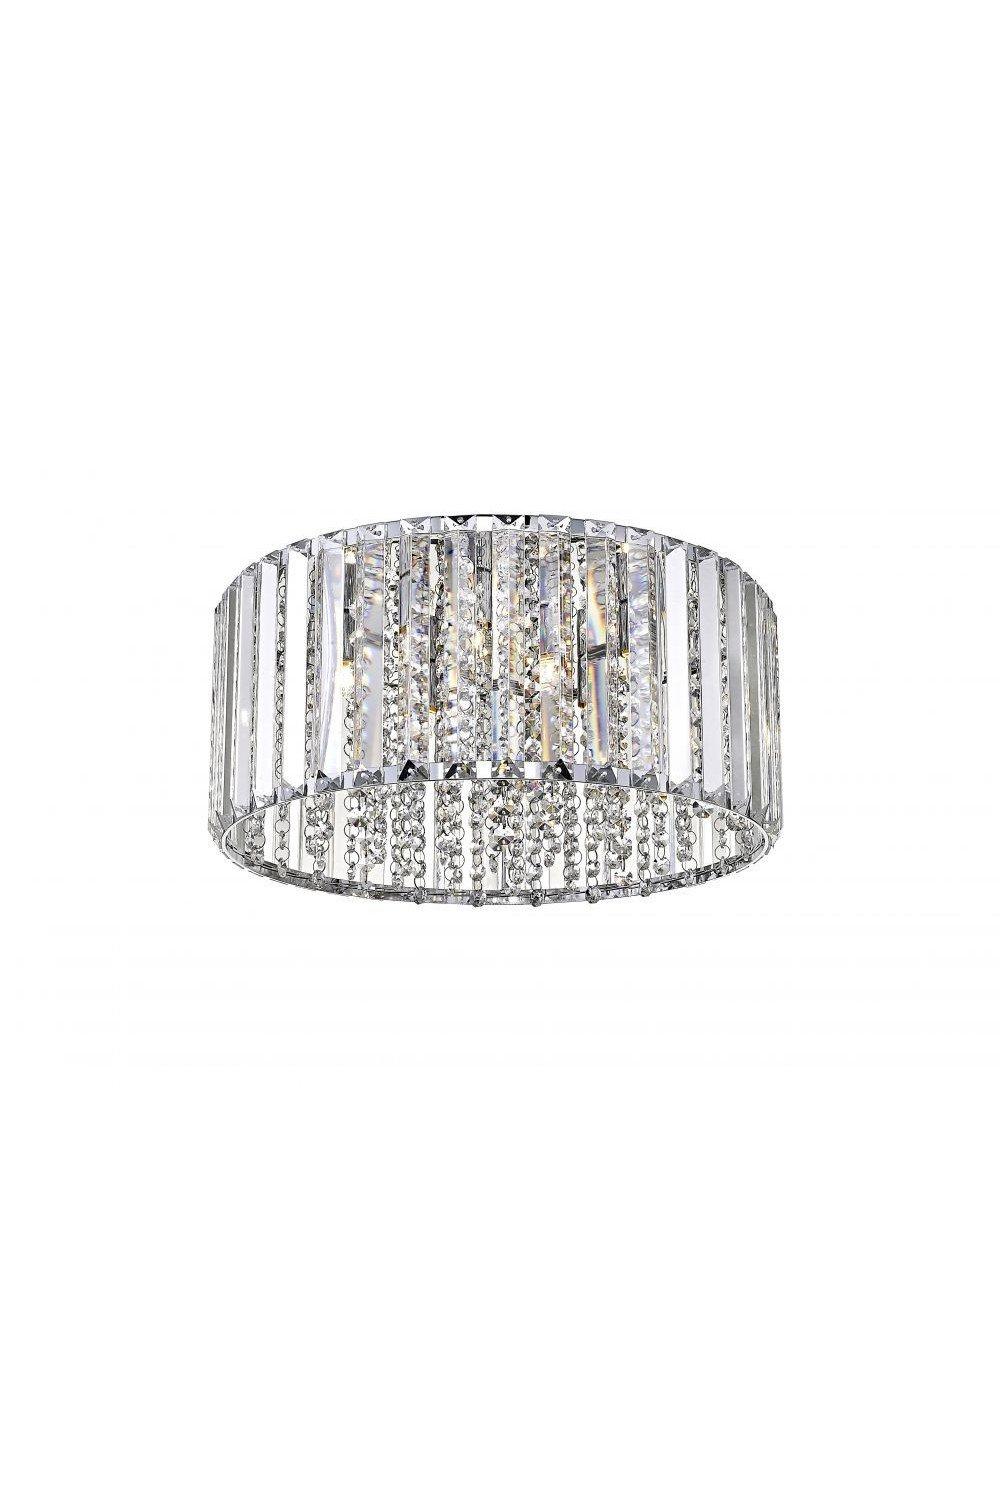 Diore 5 Light Flush Ceiling Light Chrome Crystal